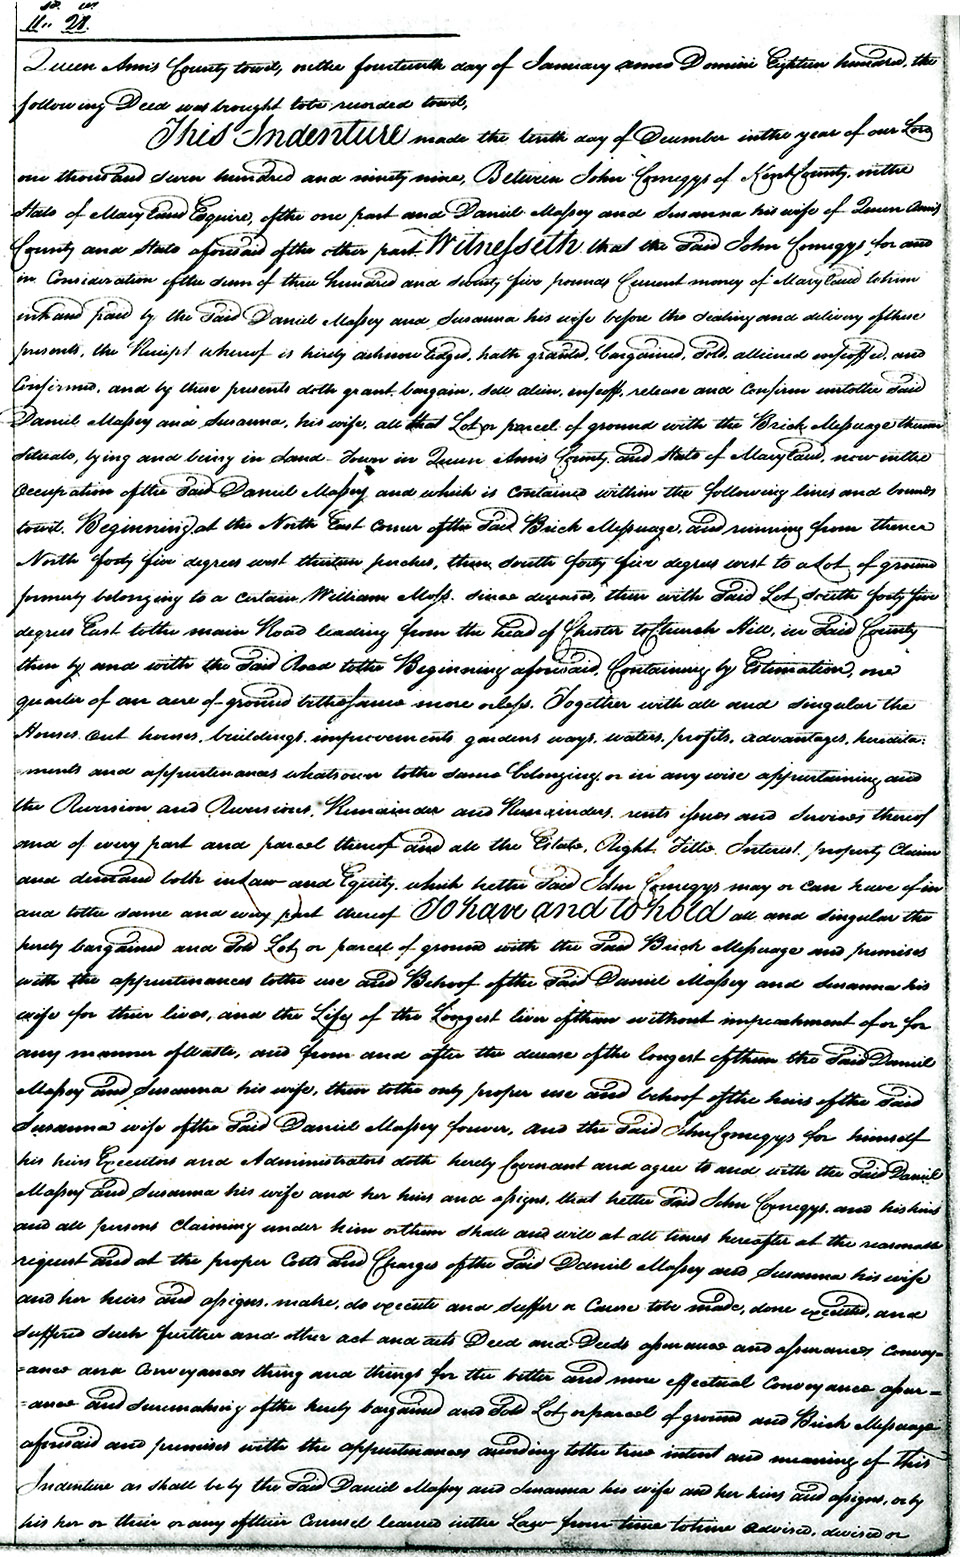 John Comegys to Daniel Massey, January 14, 1800